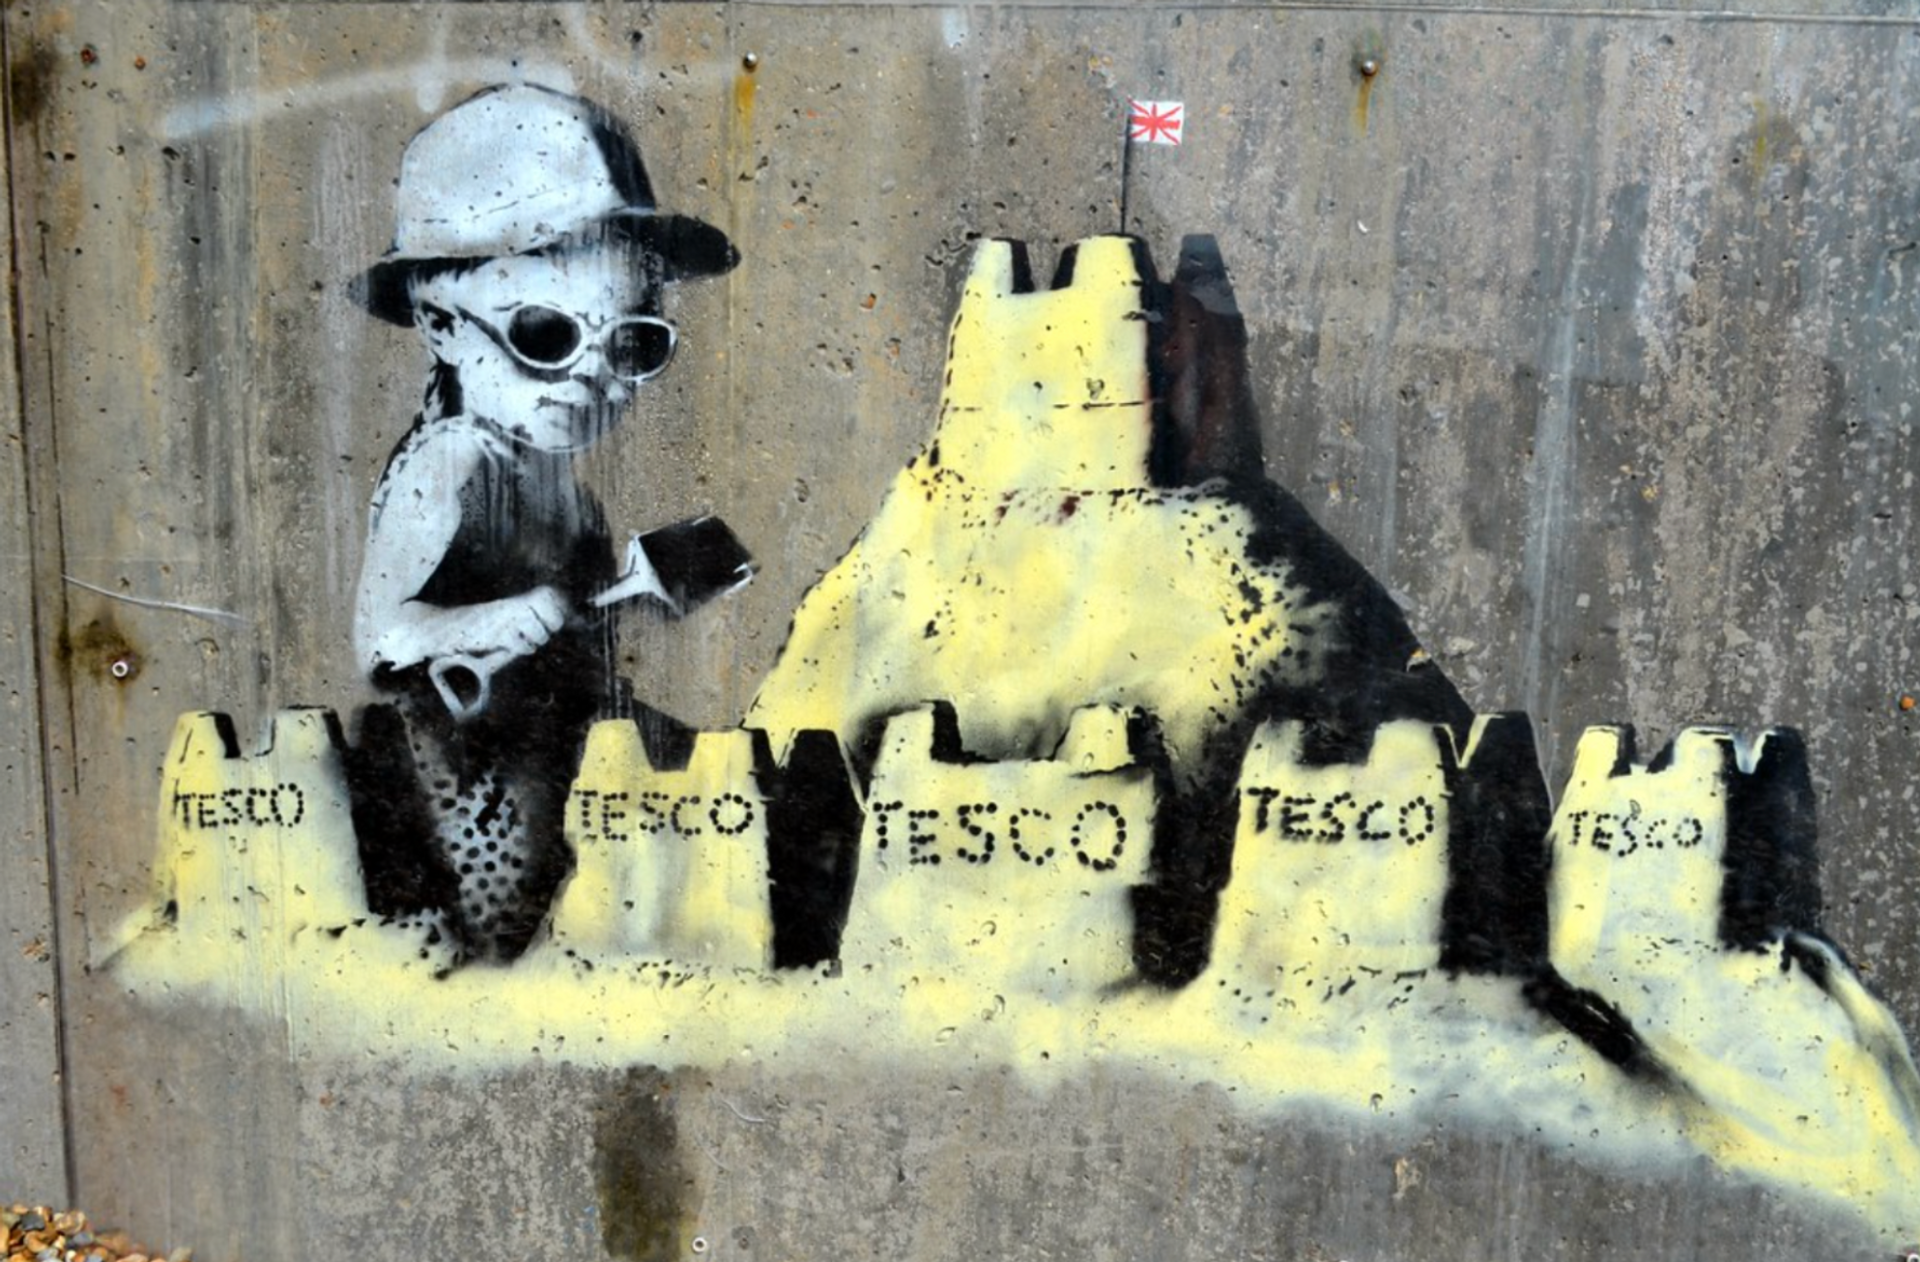 Tesco Sandcastles by Banksy